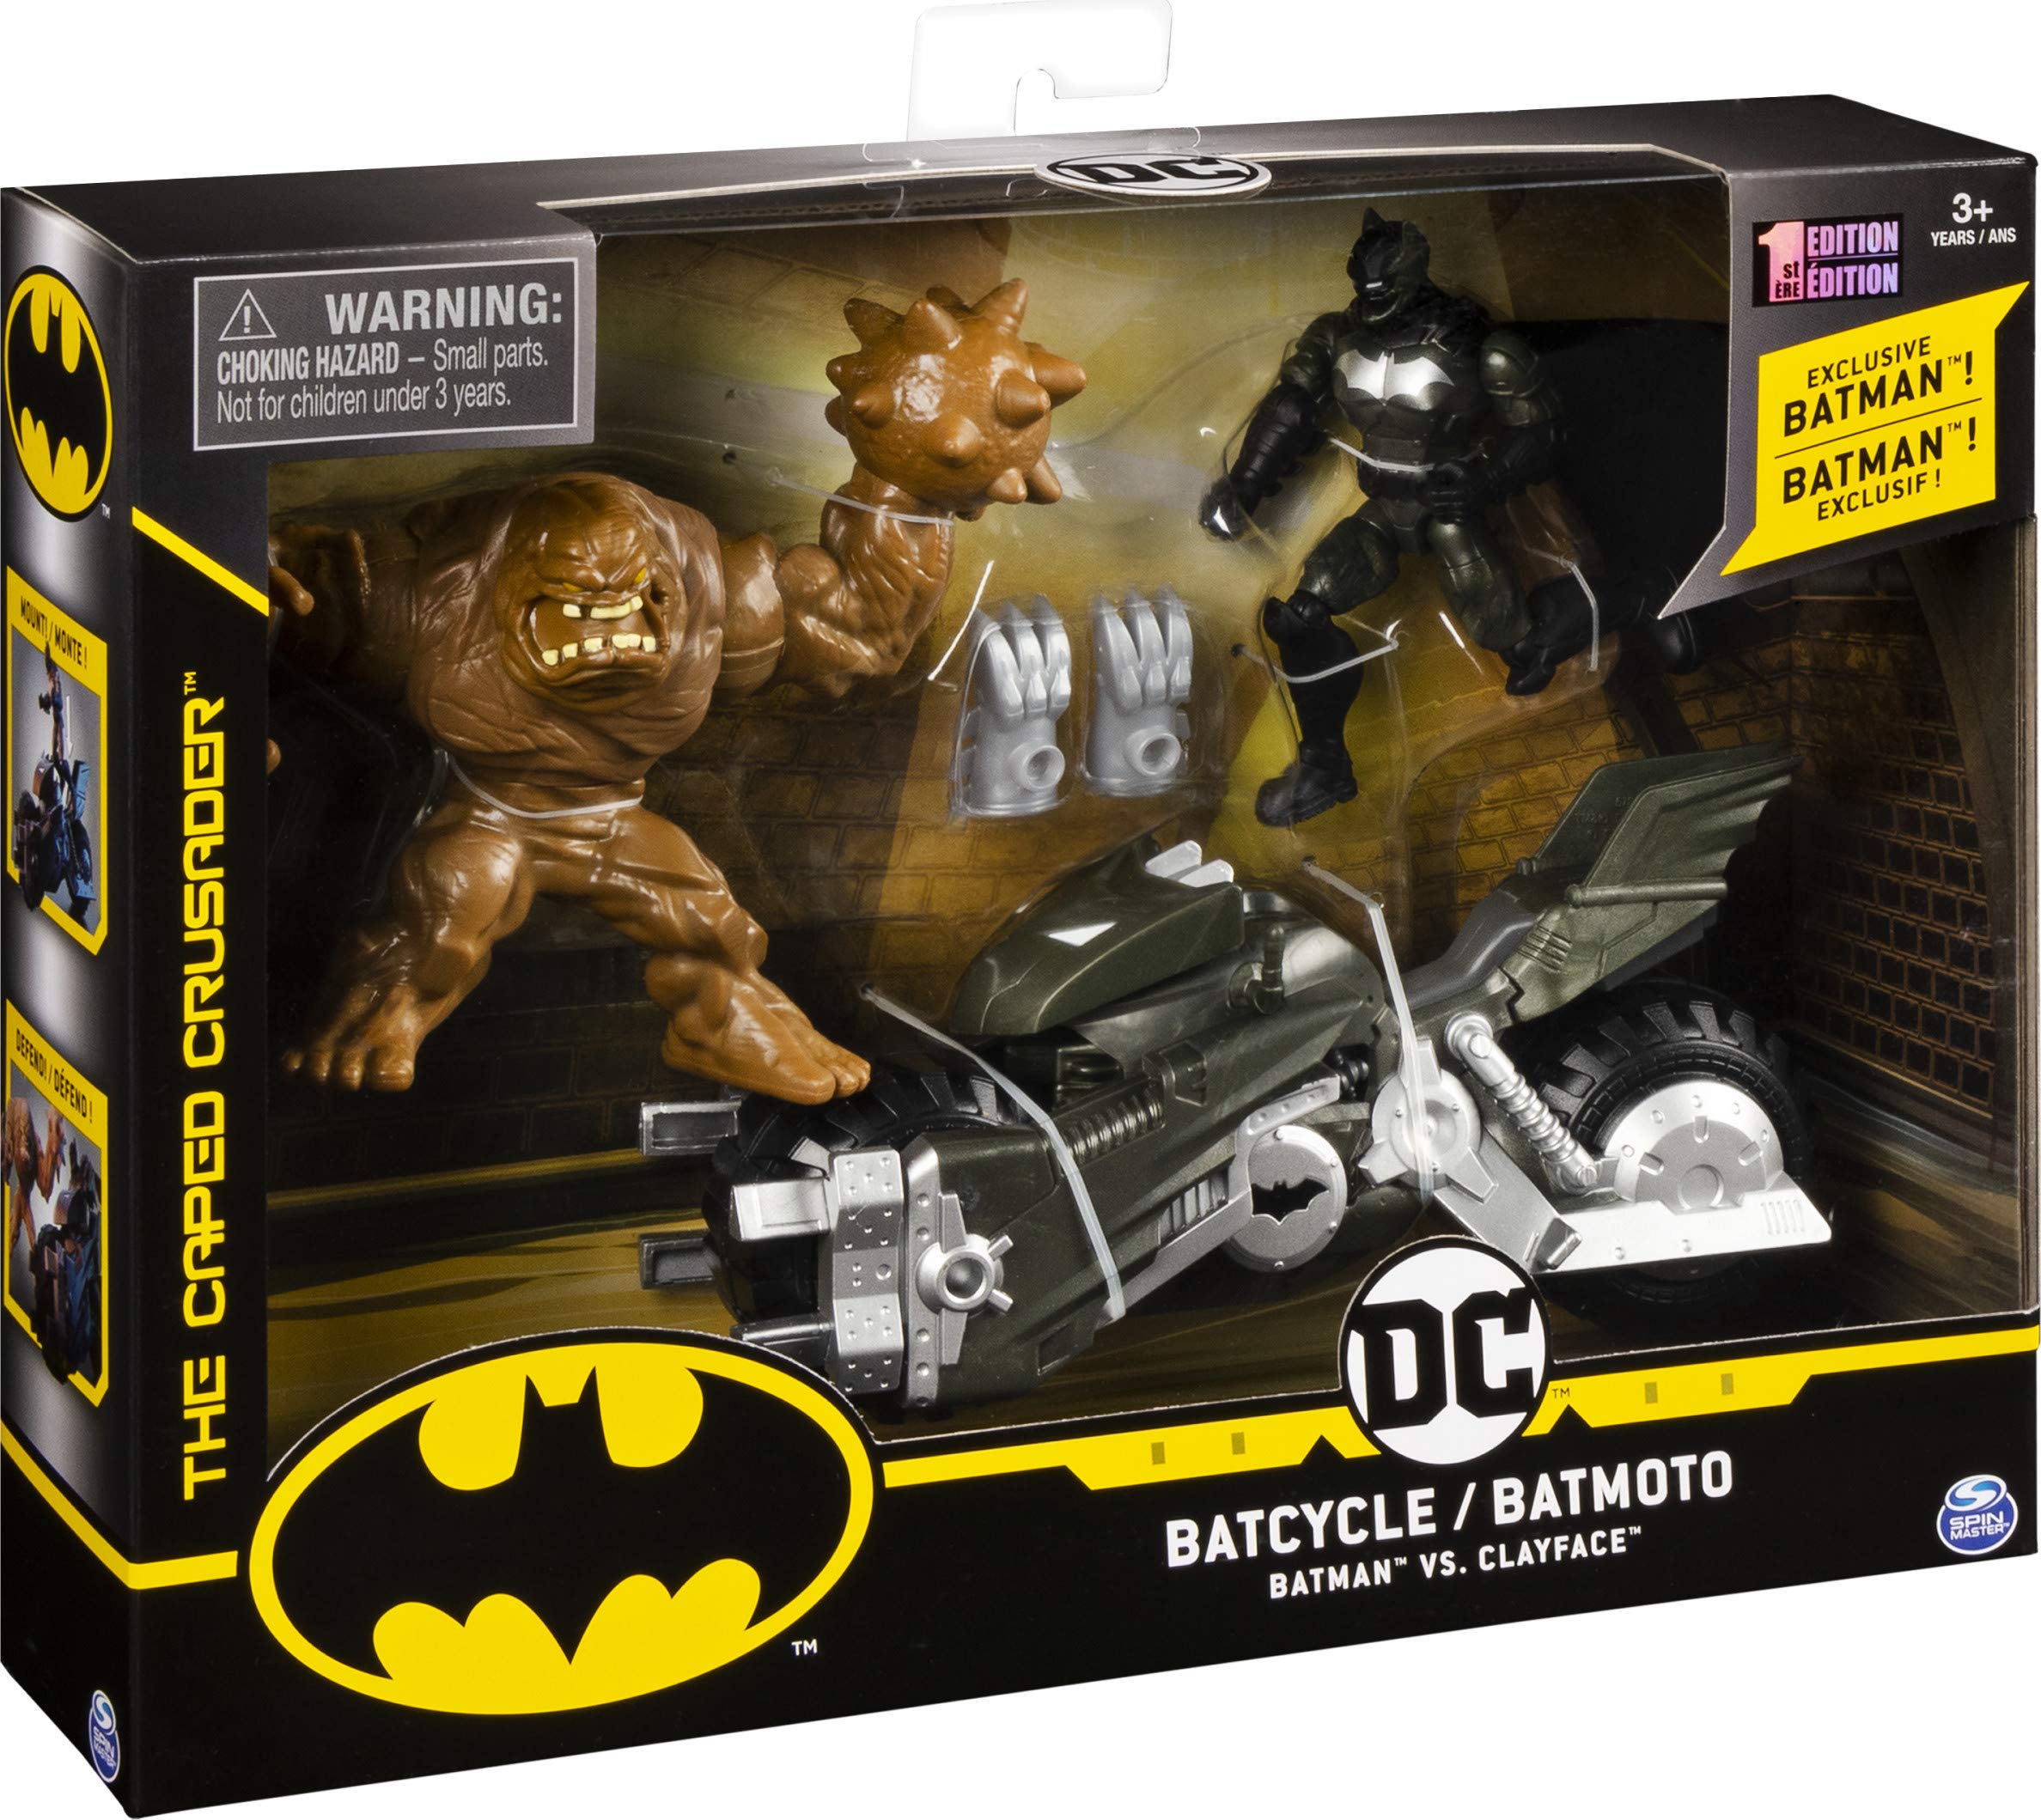 Mua DC Comics Batman Moto-Tank Vehicle with 4-inch Bane Action Figure and  Exclusive Batman Action Figure, Kids Toys for Boys trên Amazon Mỹ chính  hãng 2023 | Giaonhan247